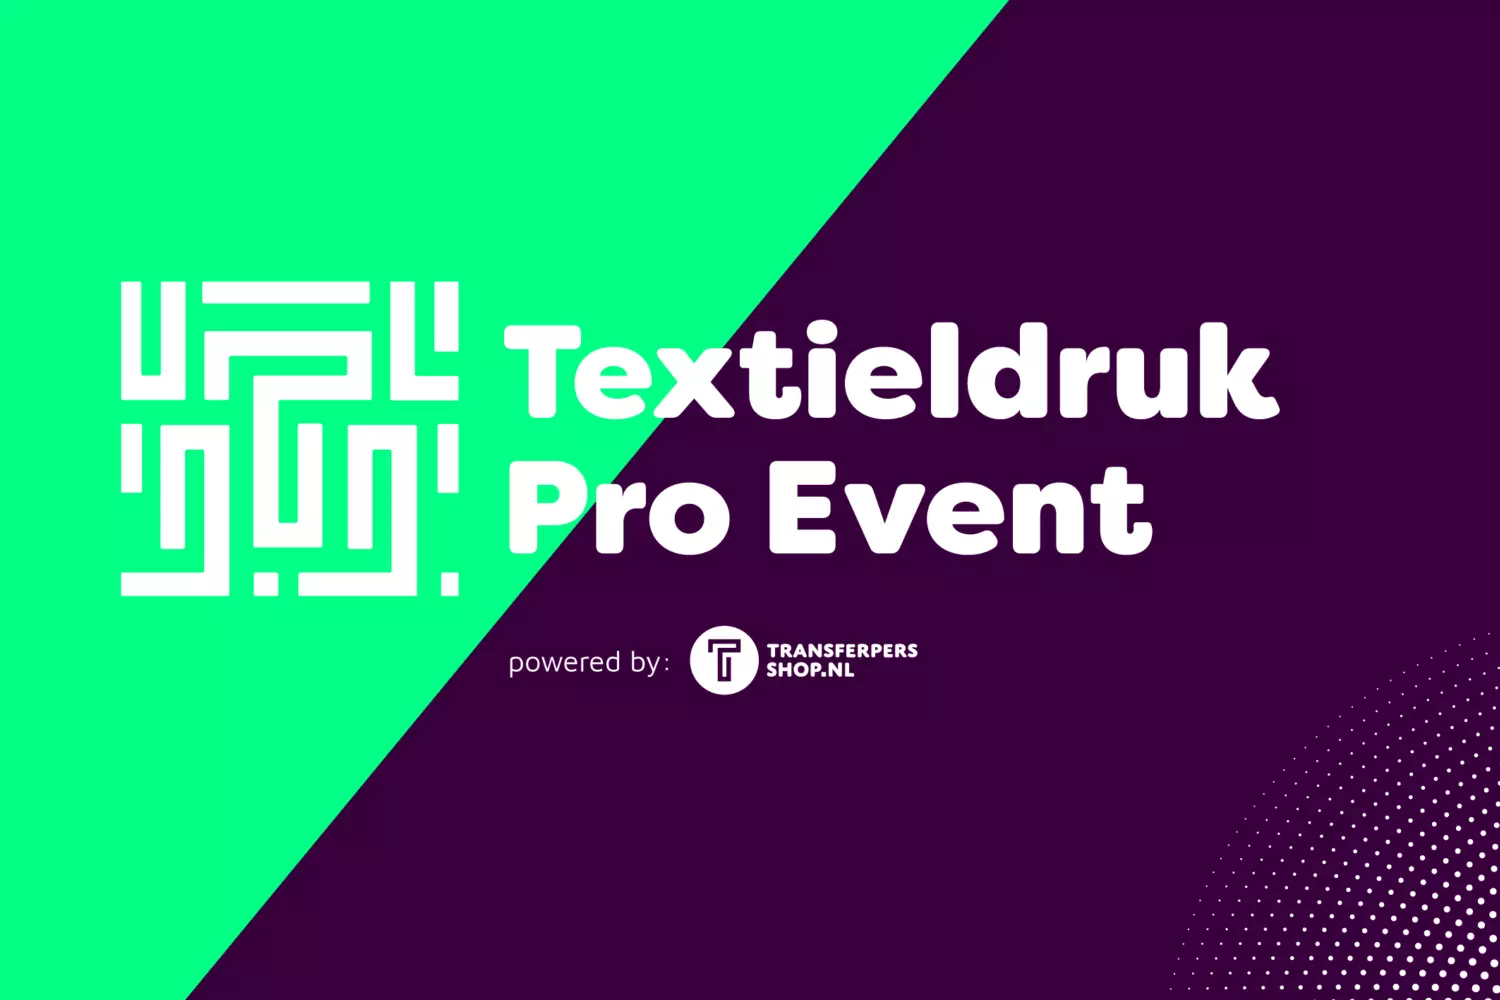 Textieldruk pro event